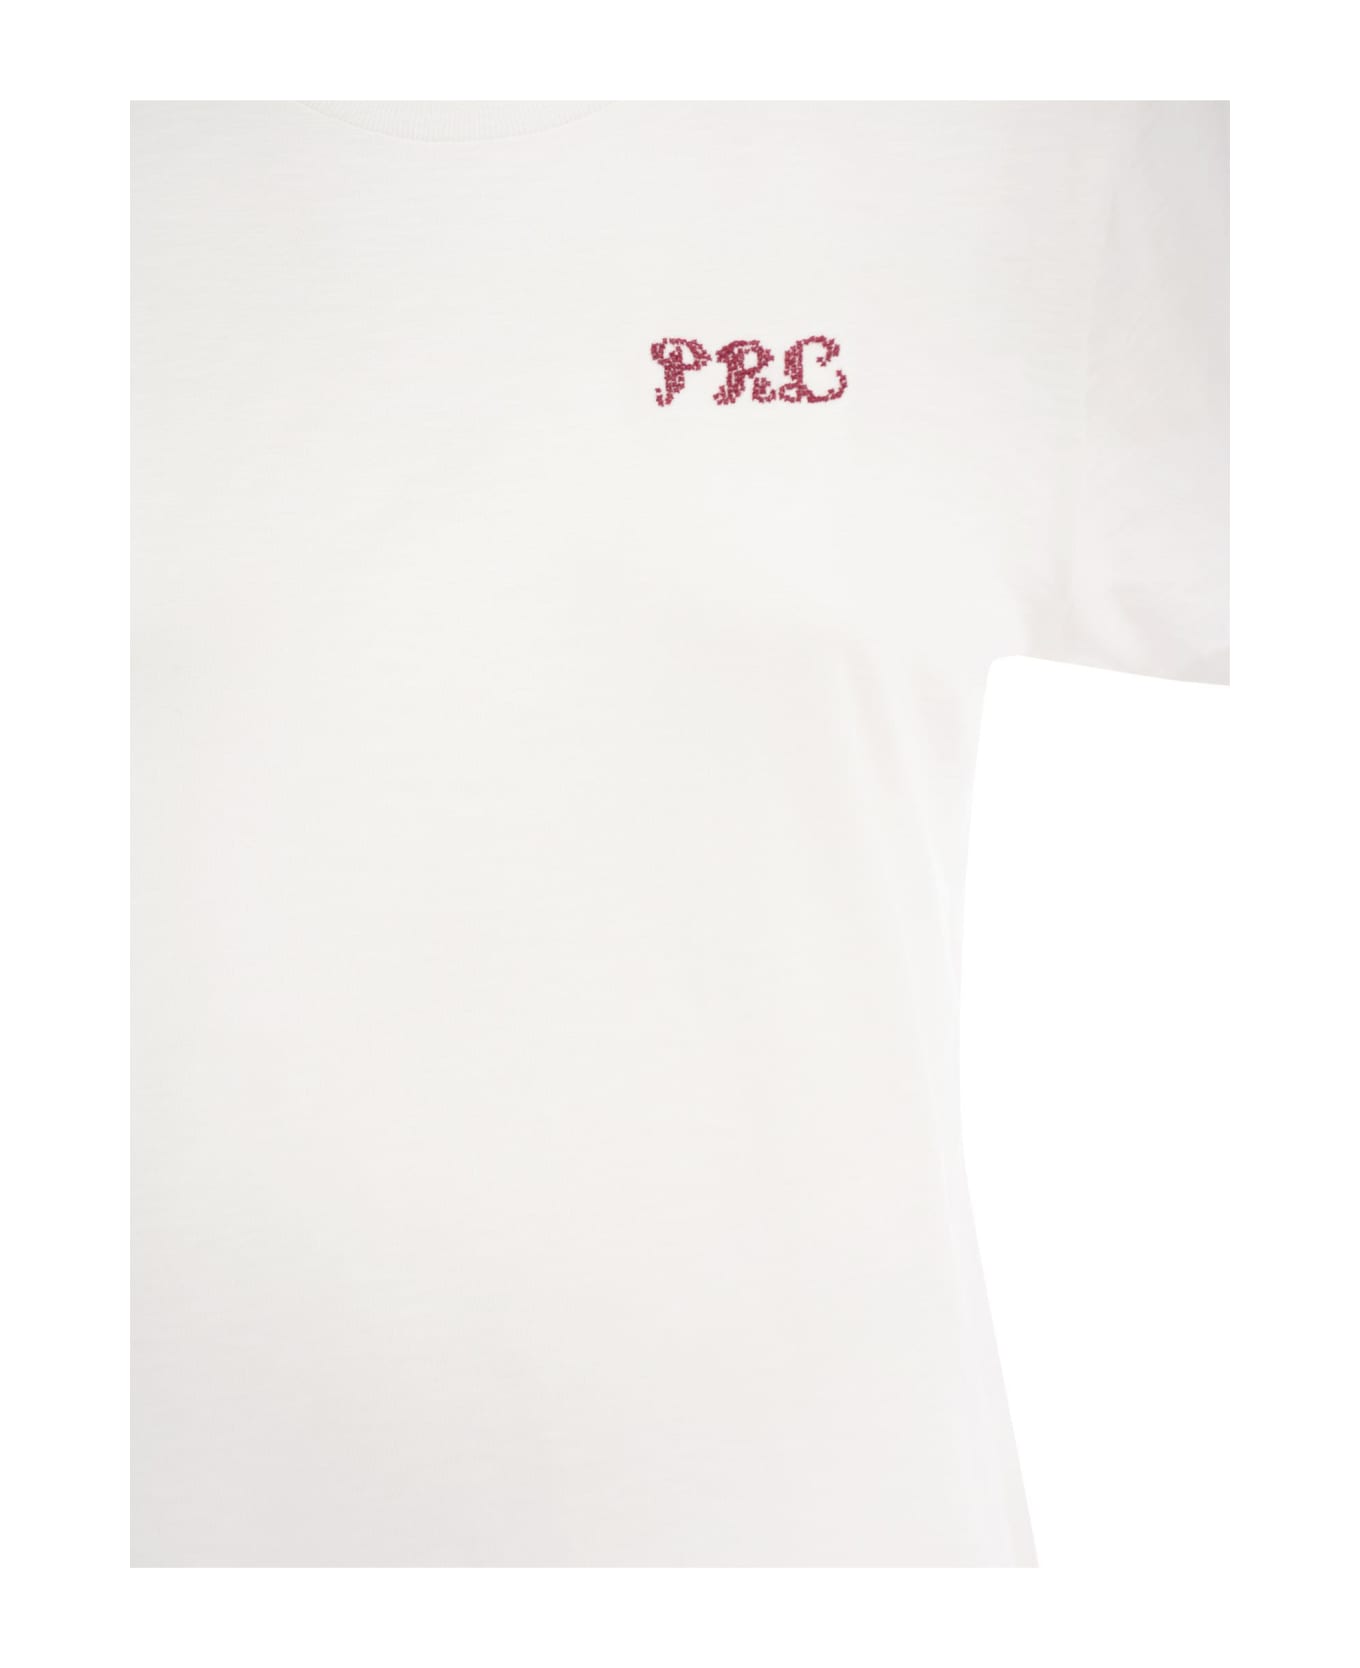 Ralph Lauren Crew-neck T-shirt With Embroidery - Nevis Tシャツ